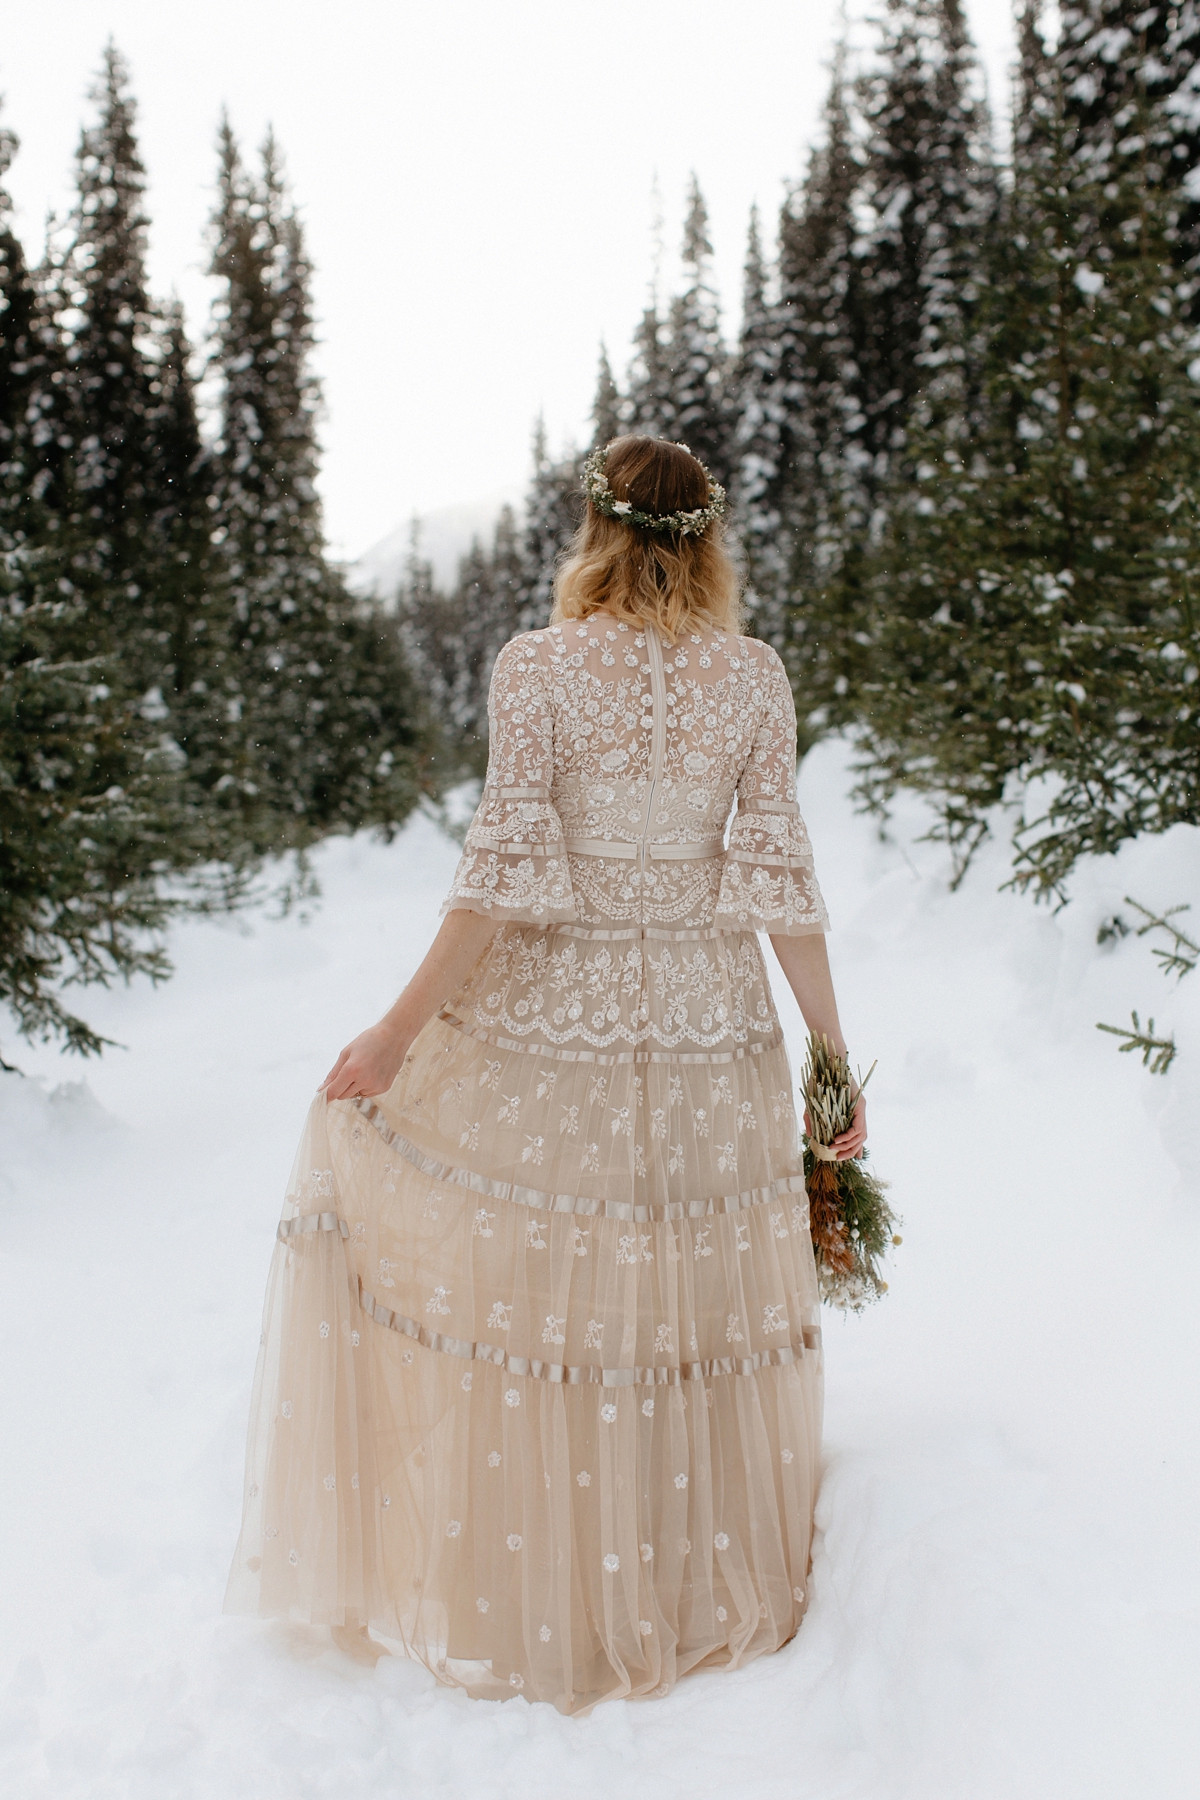 Intimate winter elopement Needle Thread dress 34